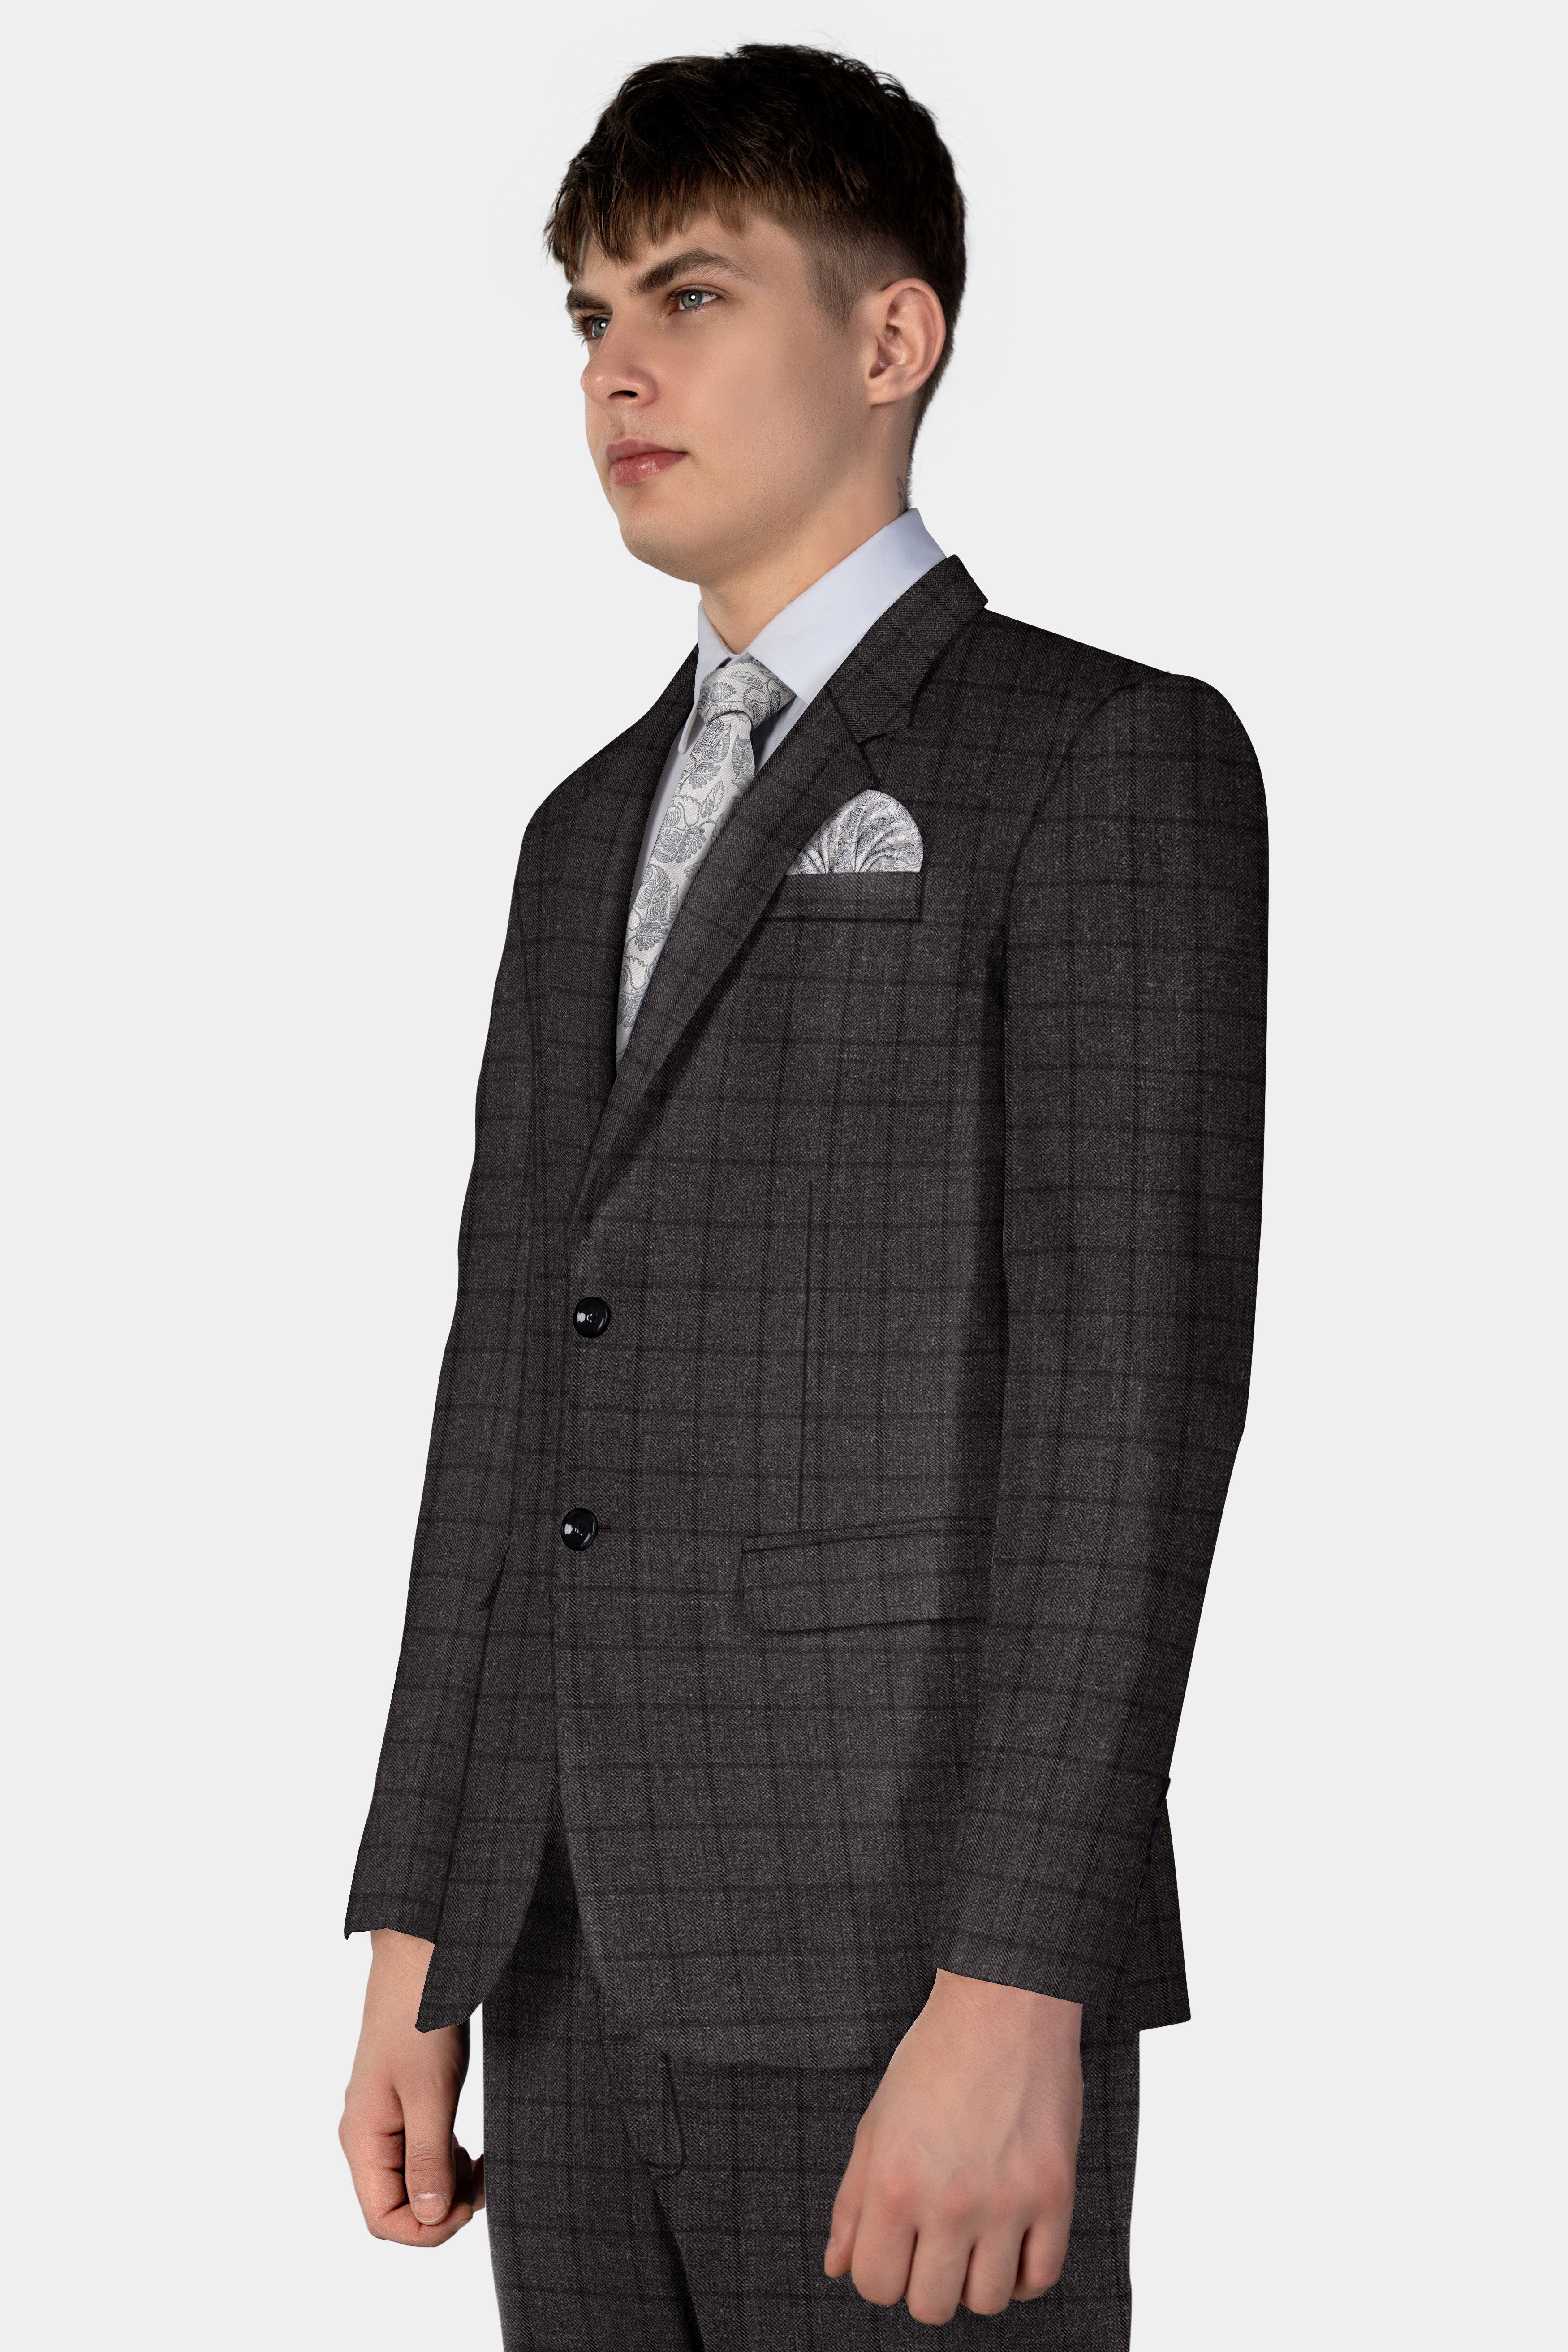 Thunder Gray Windowpane Tweed Suit